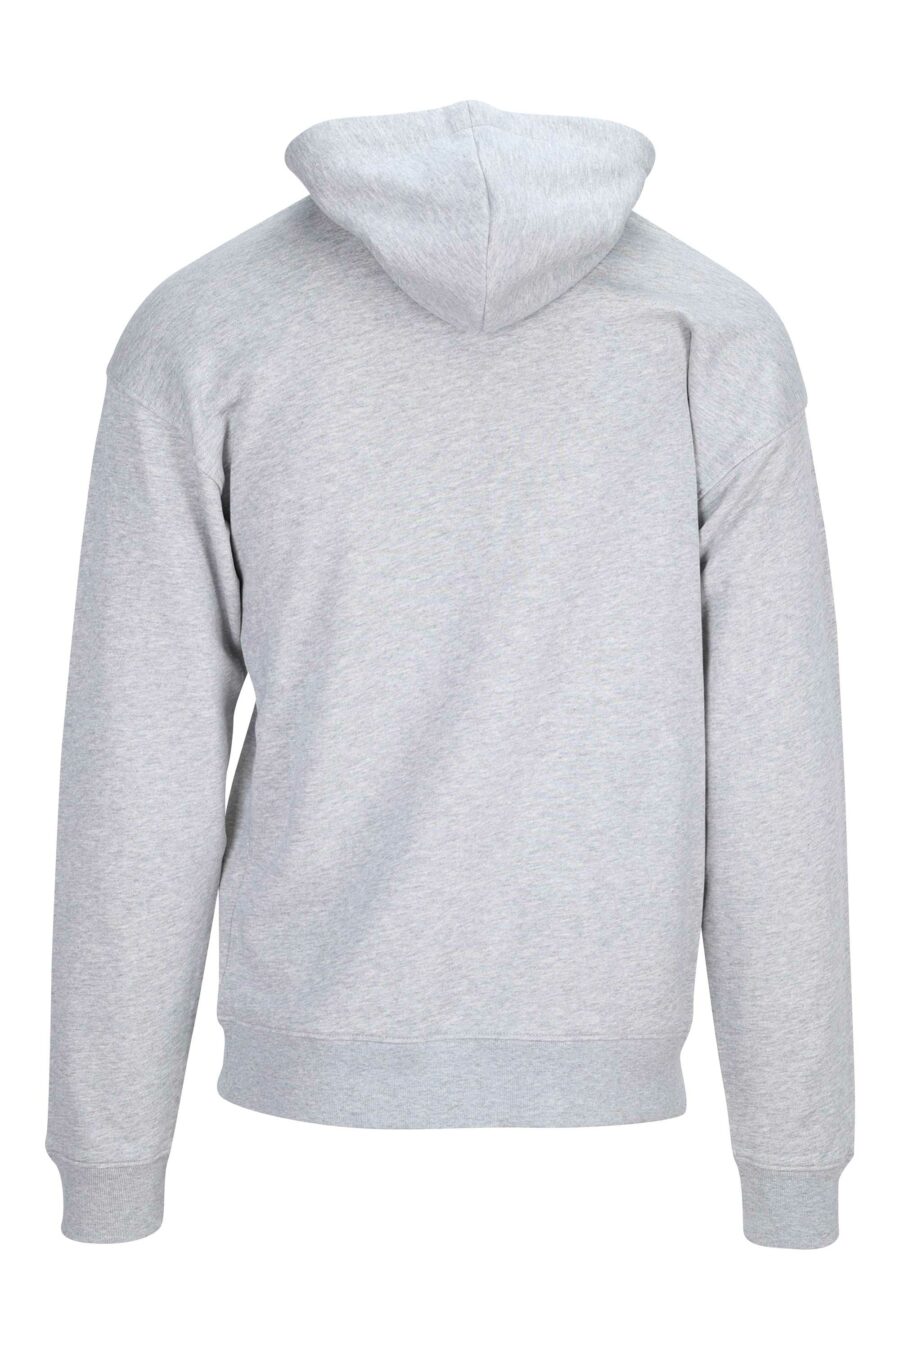 Grey hooded sweatshirt with logo "teddy tailor" - 667113124940 1